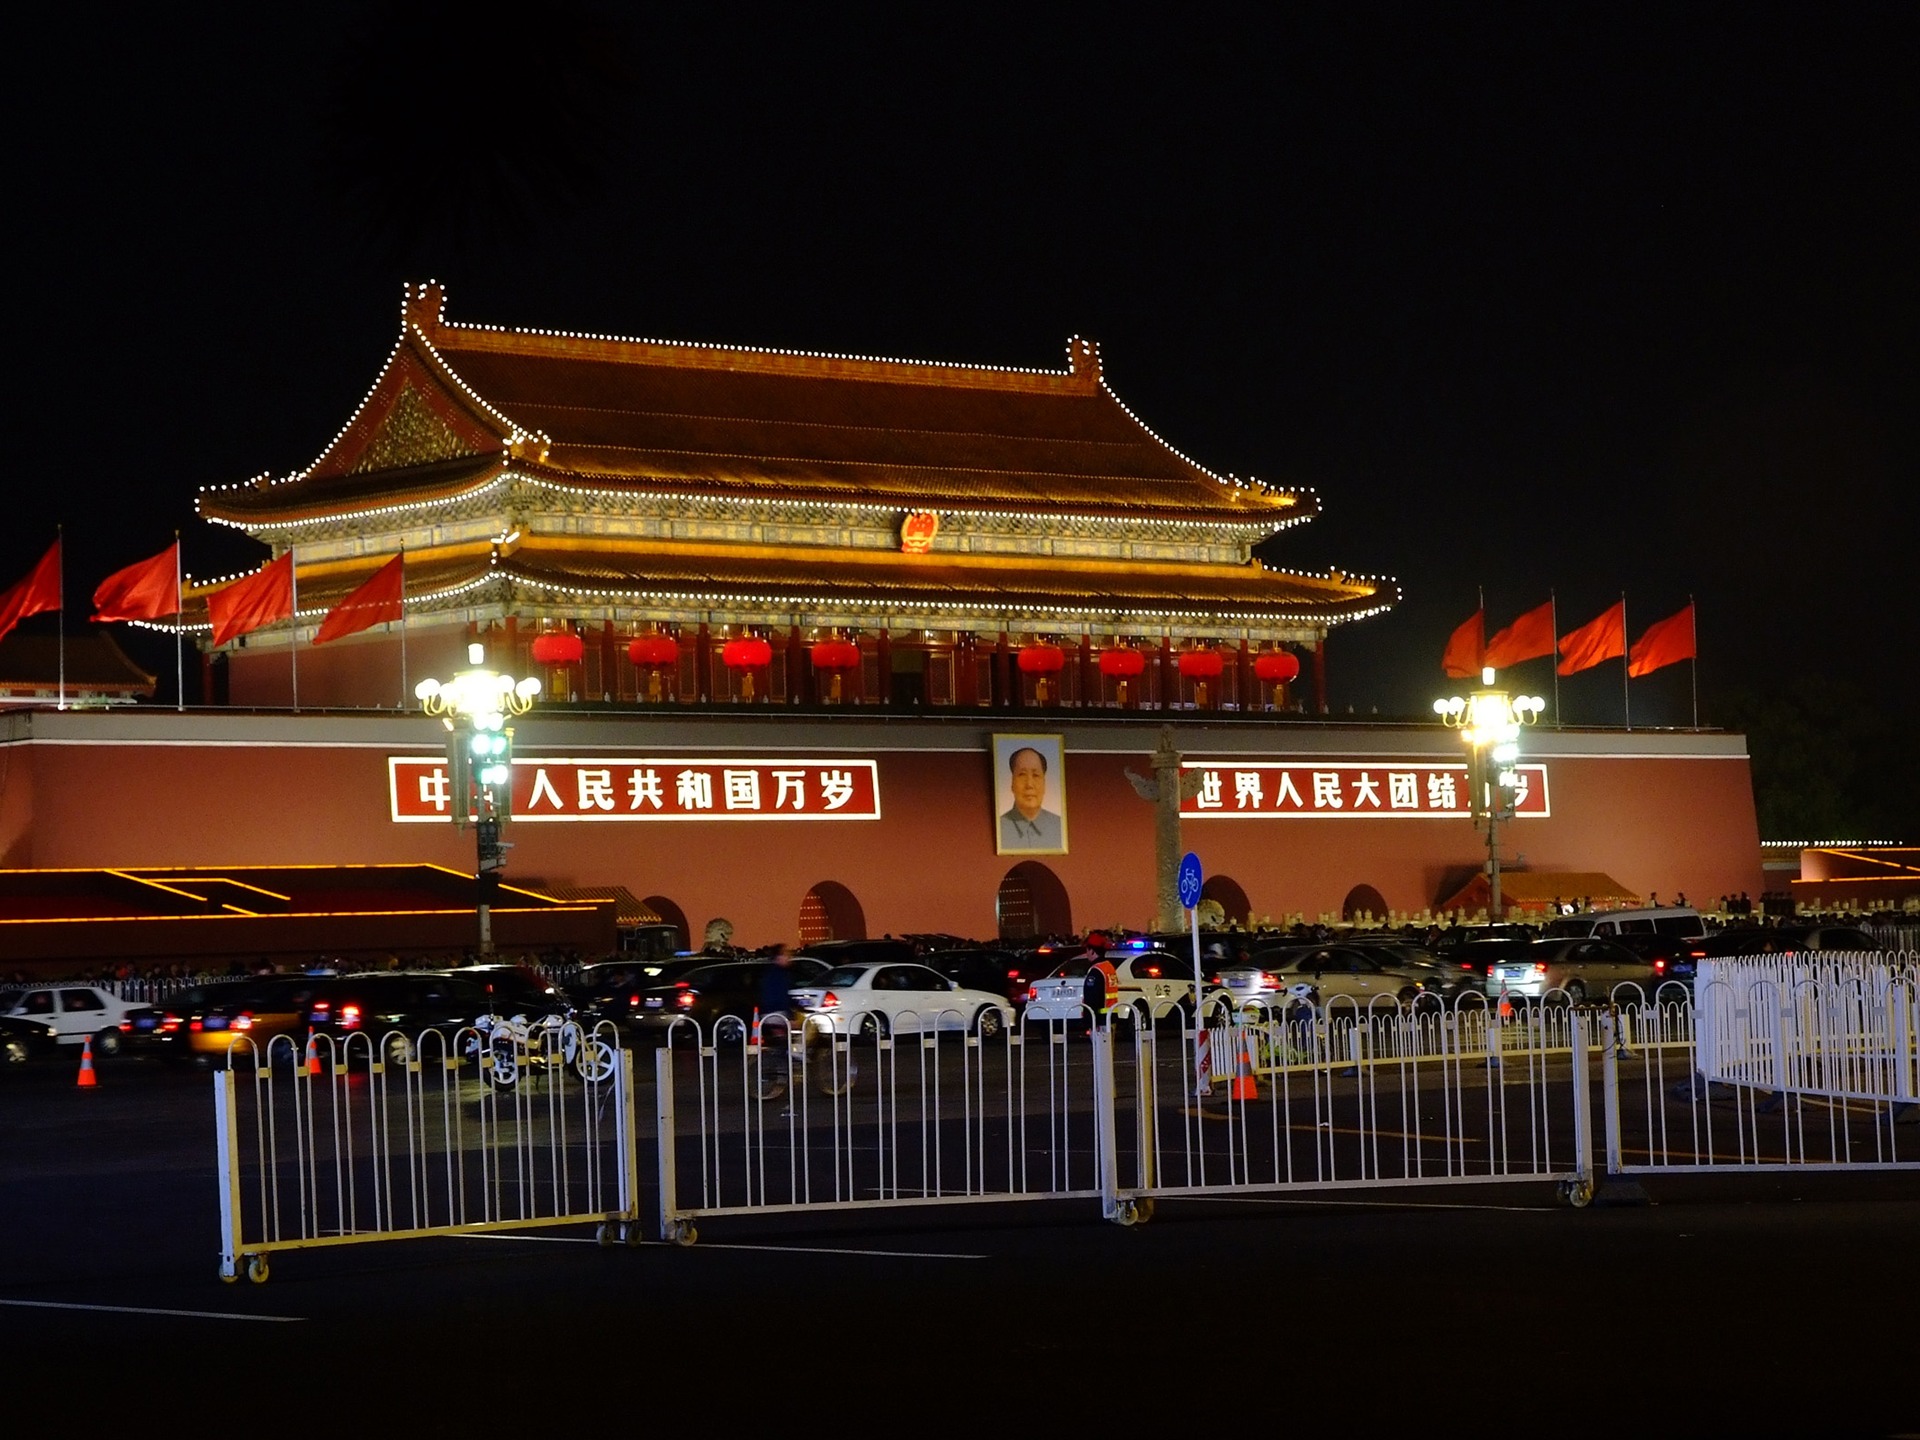 На площади Тяньаньмэнь красочные ночь (арматурных работ) #30 - 1920x1440